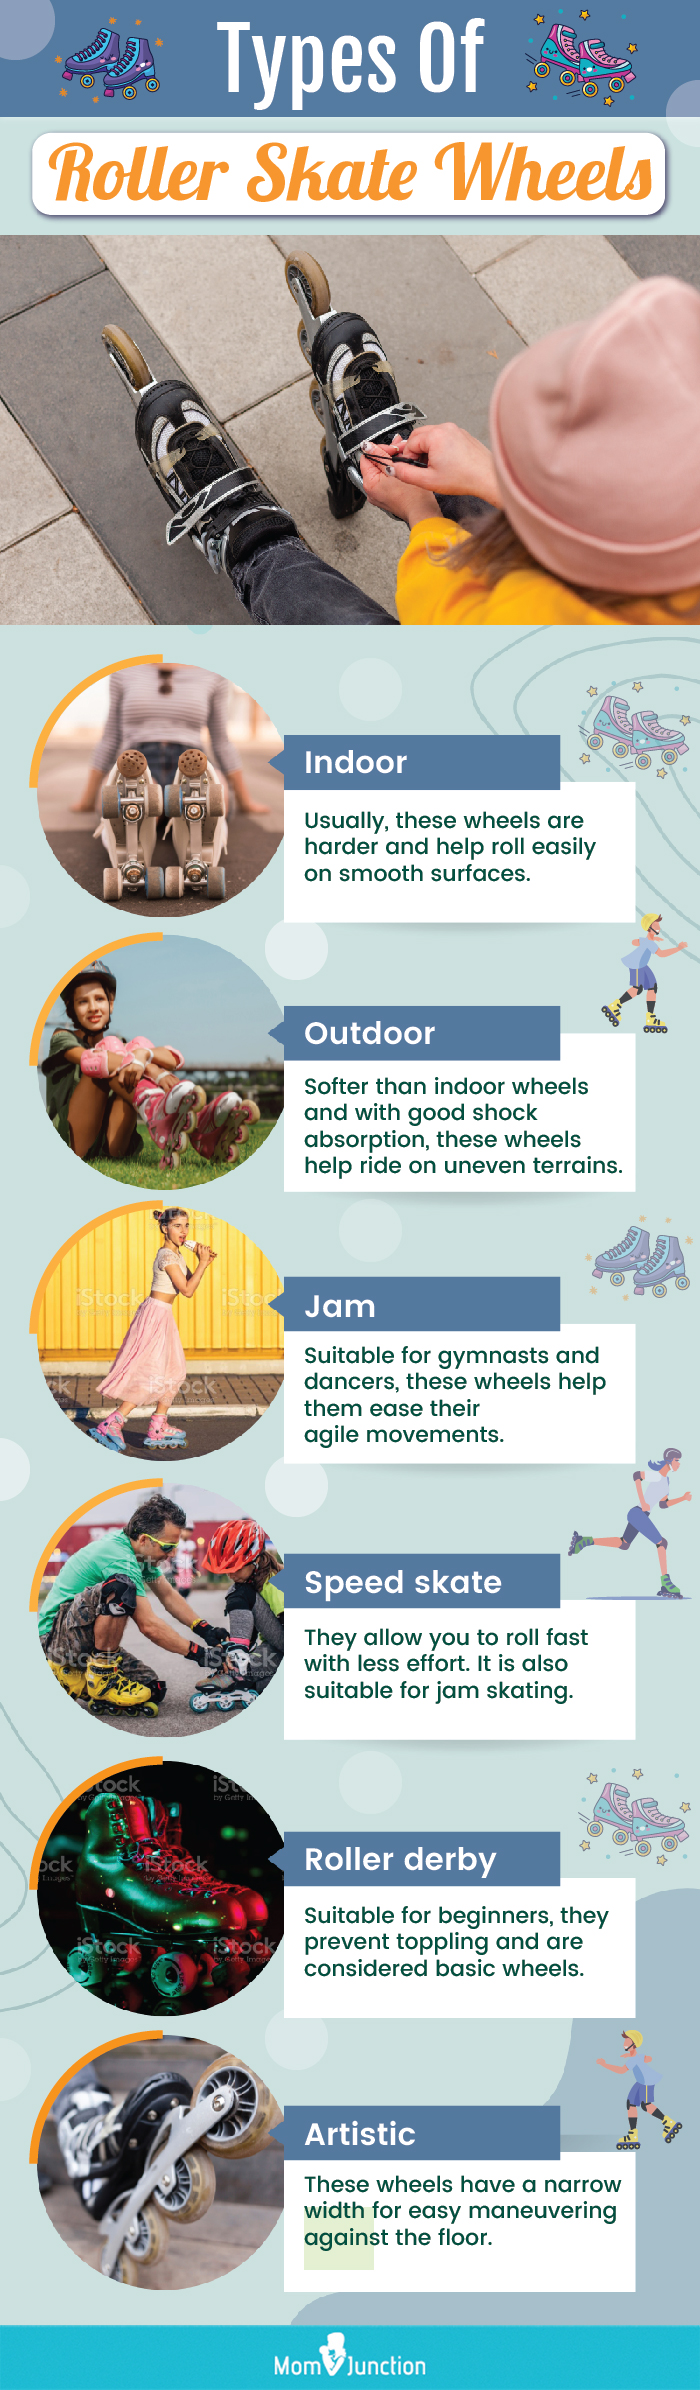 Types Of Roller Skate Wheels (Infographic)